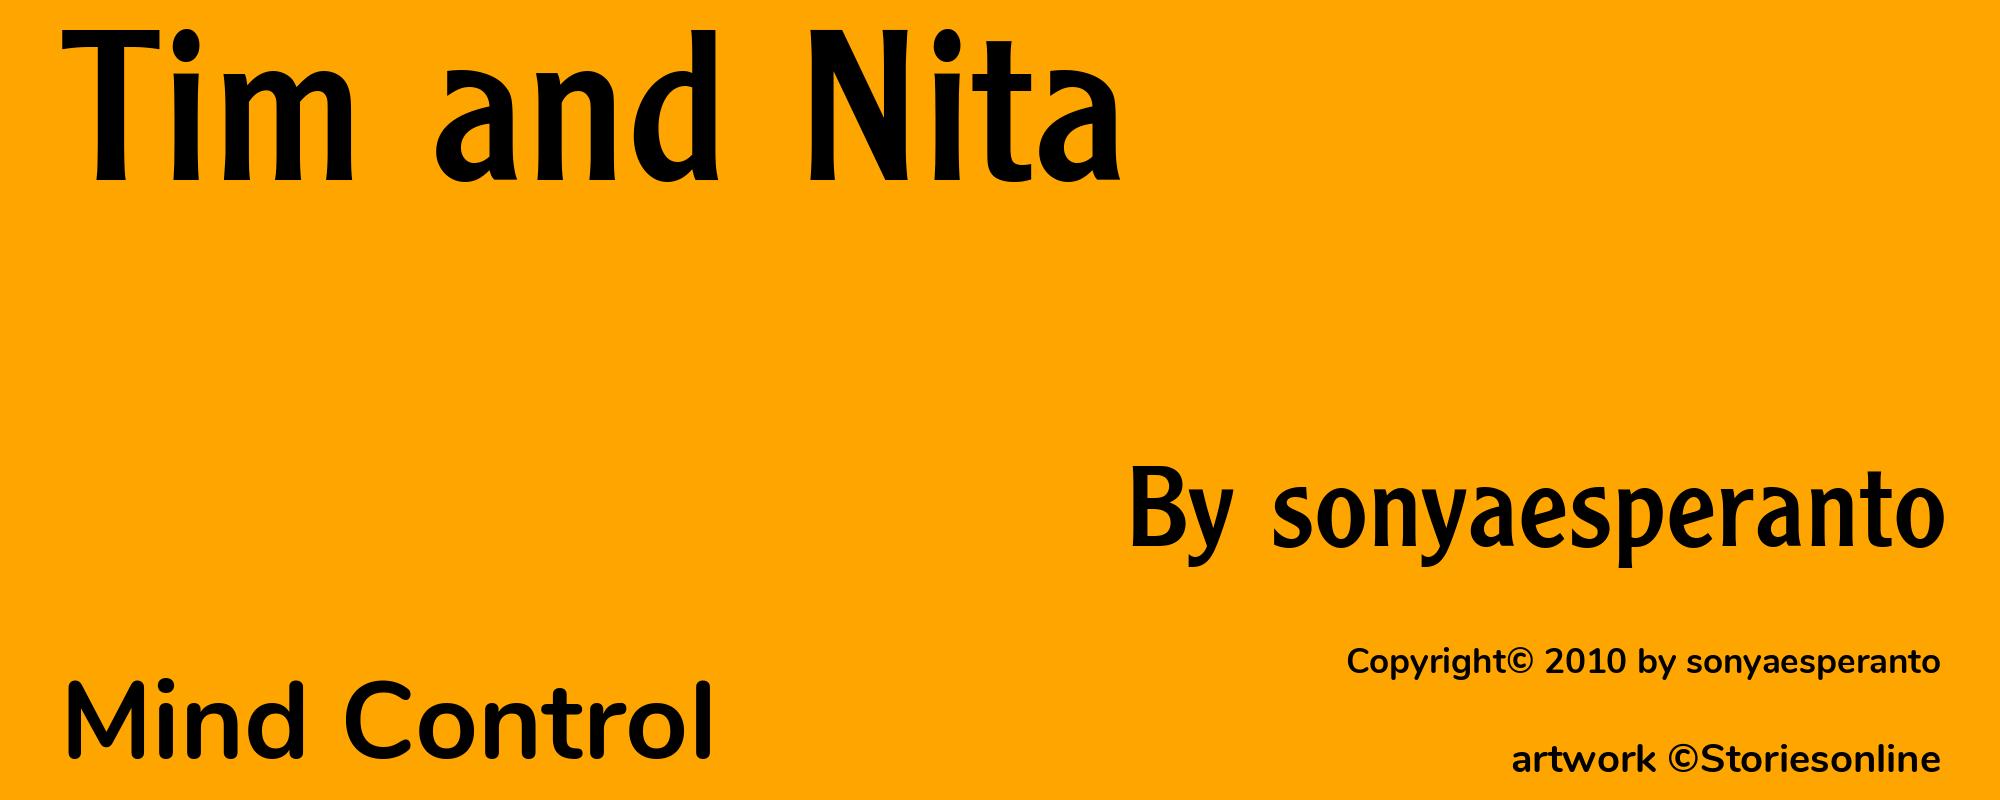 Tim and Nita - Cover